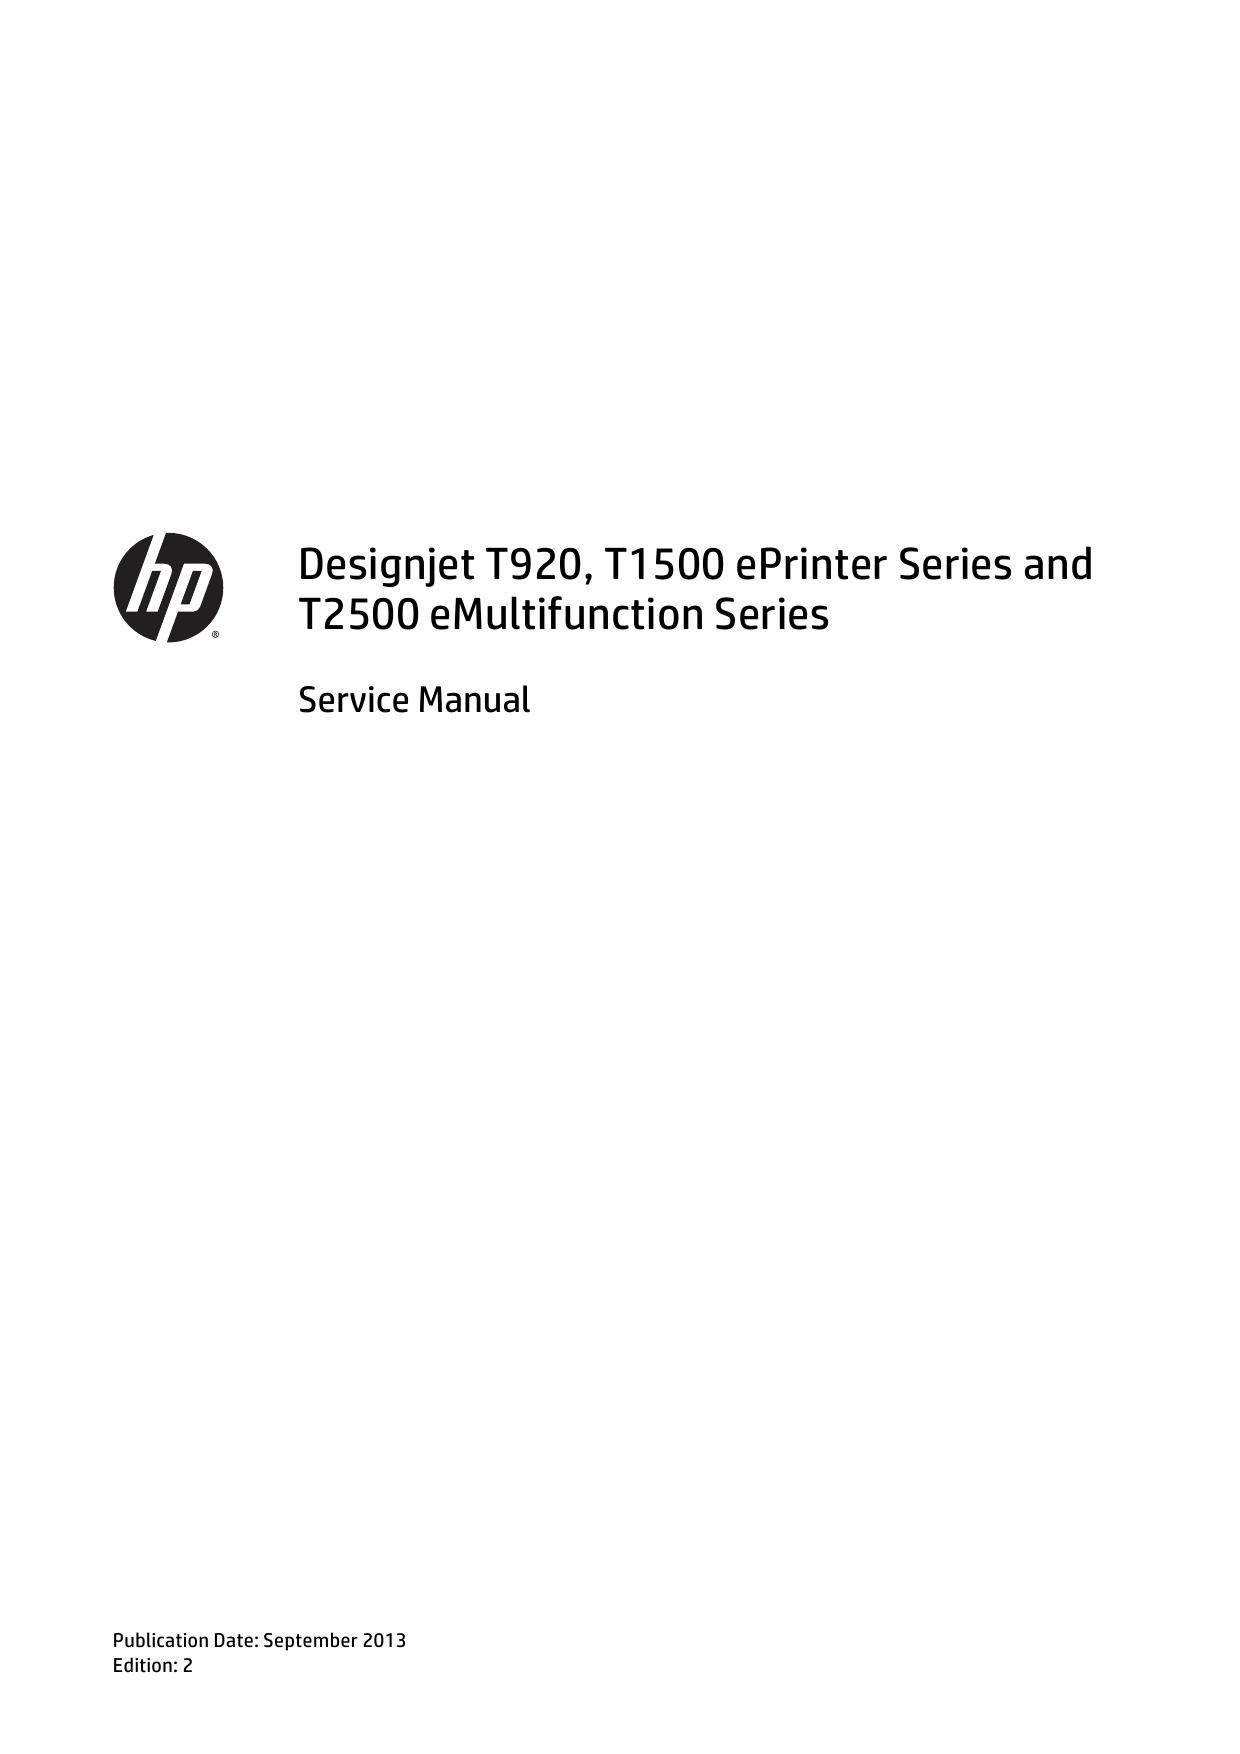 HP DesignJet T920 T1500 T2500 Service Manual-1